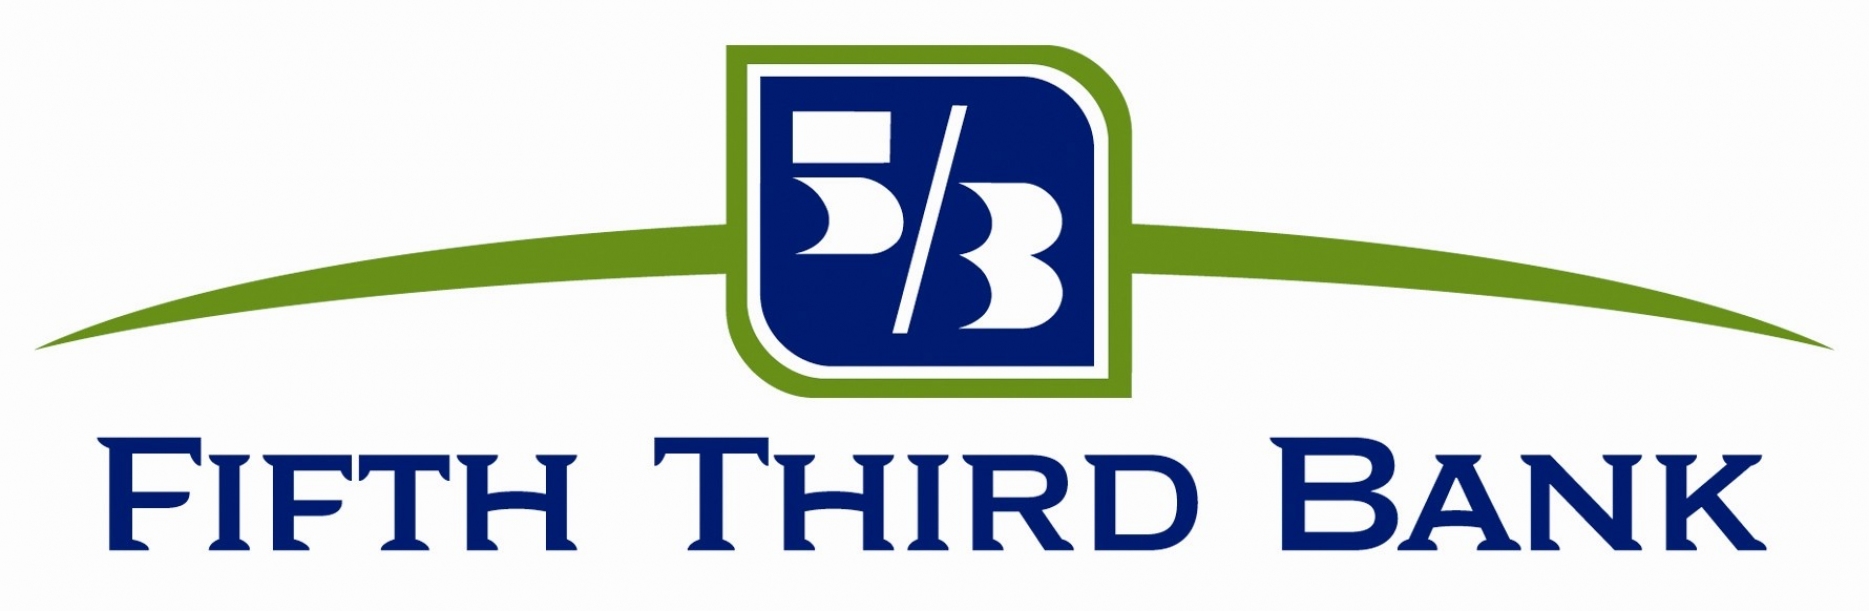 Fifth Third Bank Brand Logo